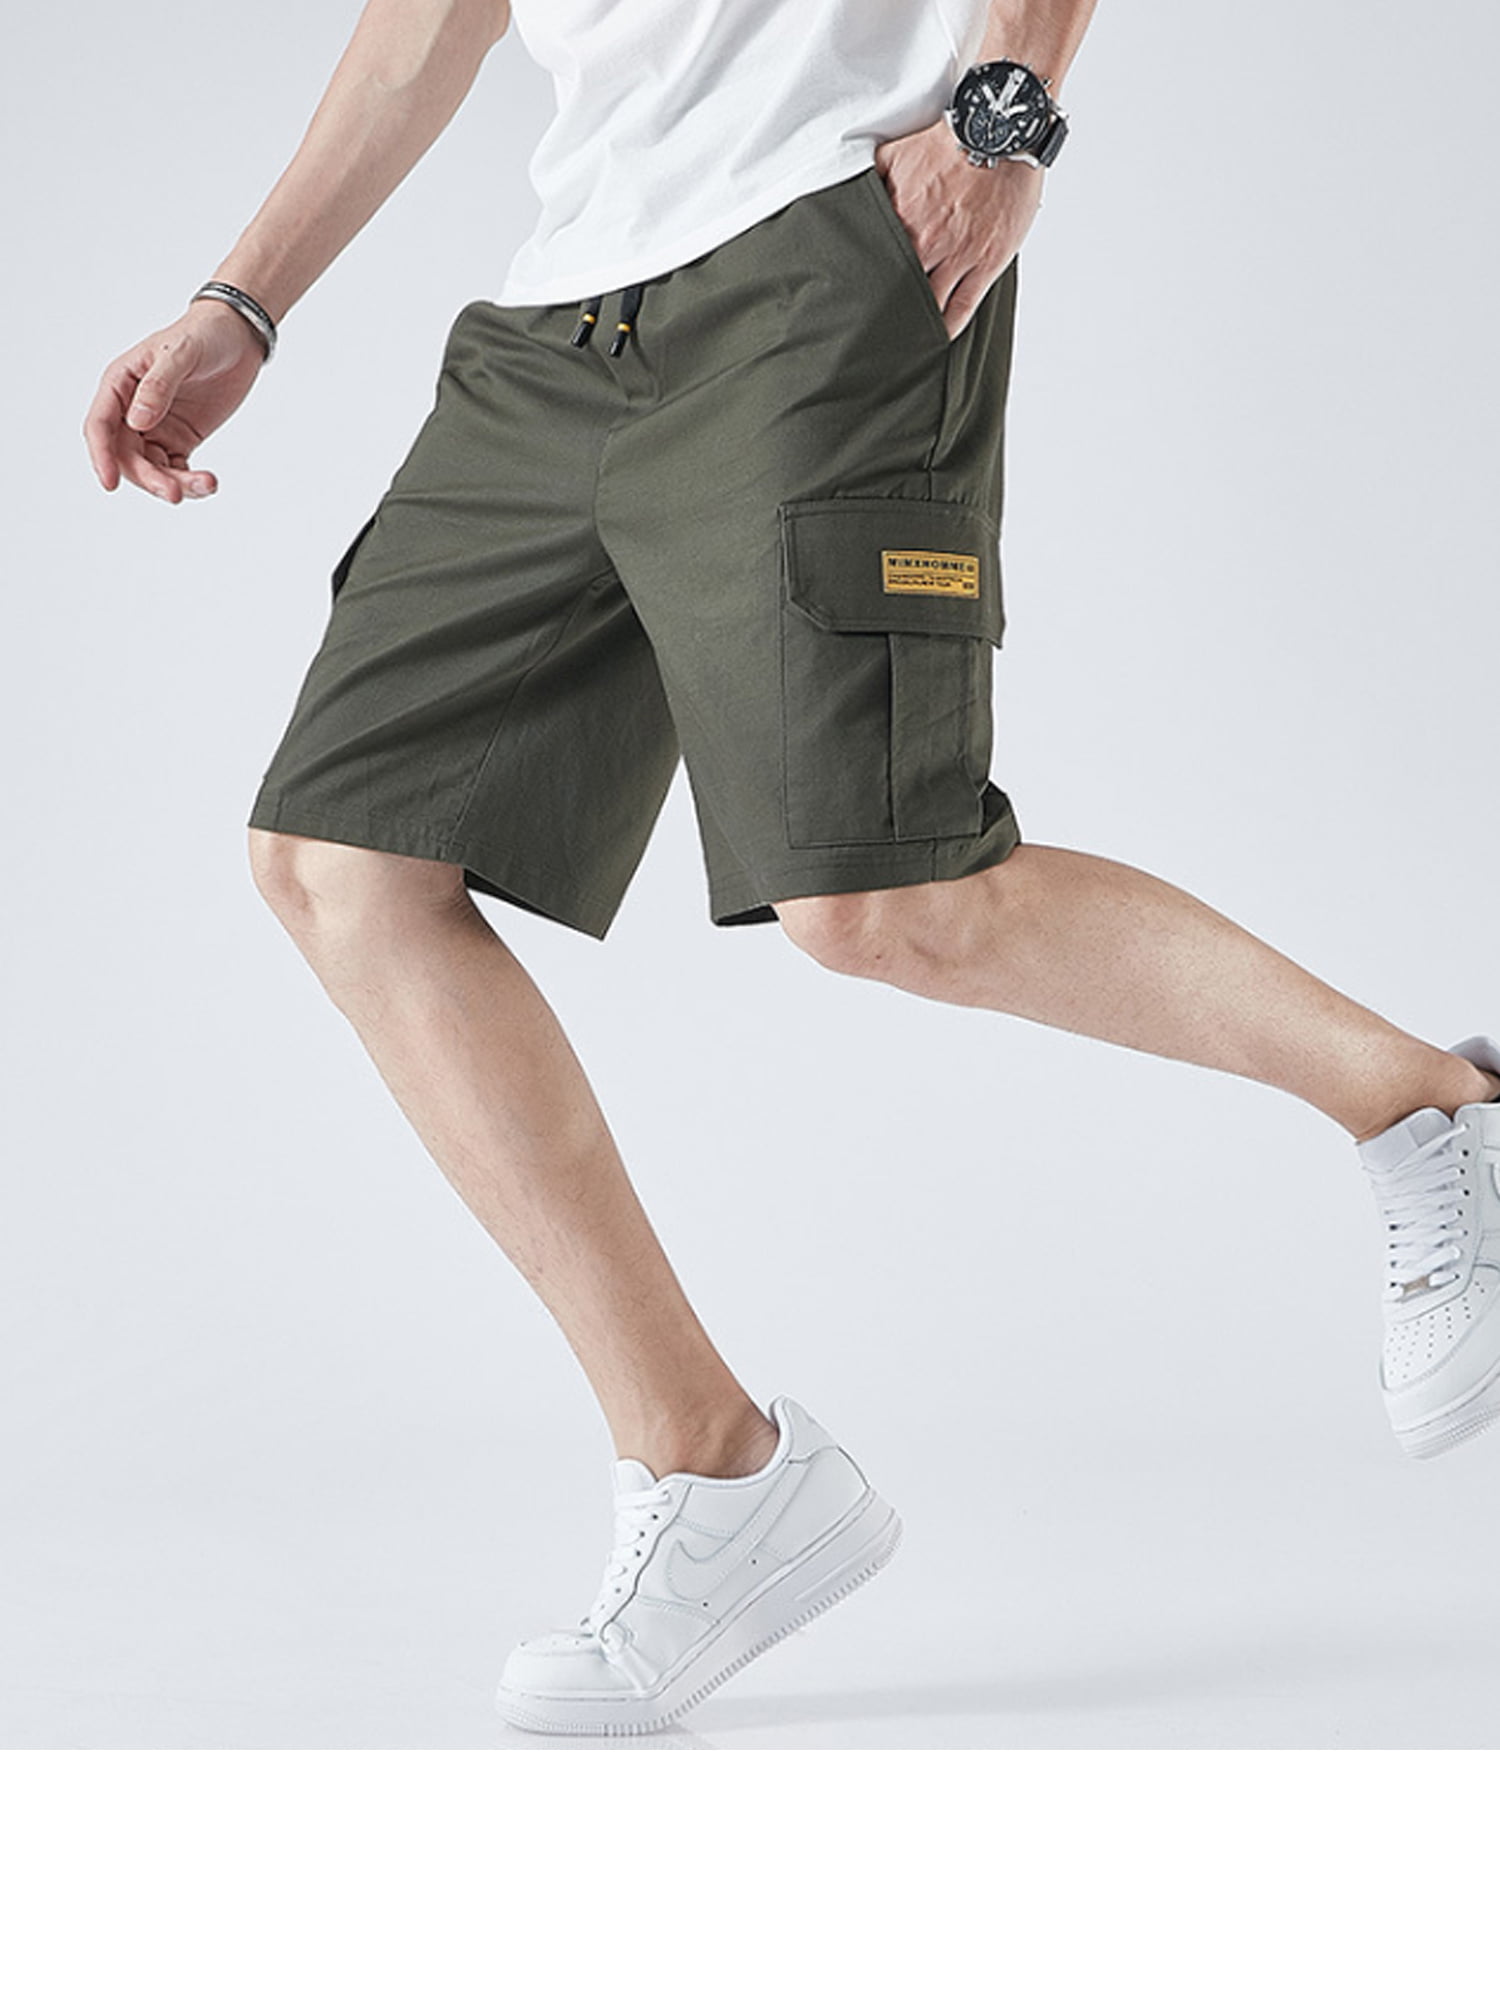 Men Shorts Summer Shorts Outdoor Military Shorts Sport L~3XL Plus size 